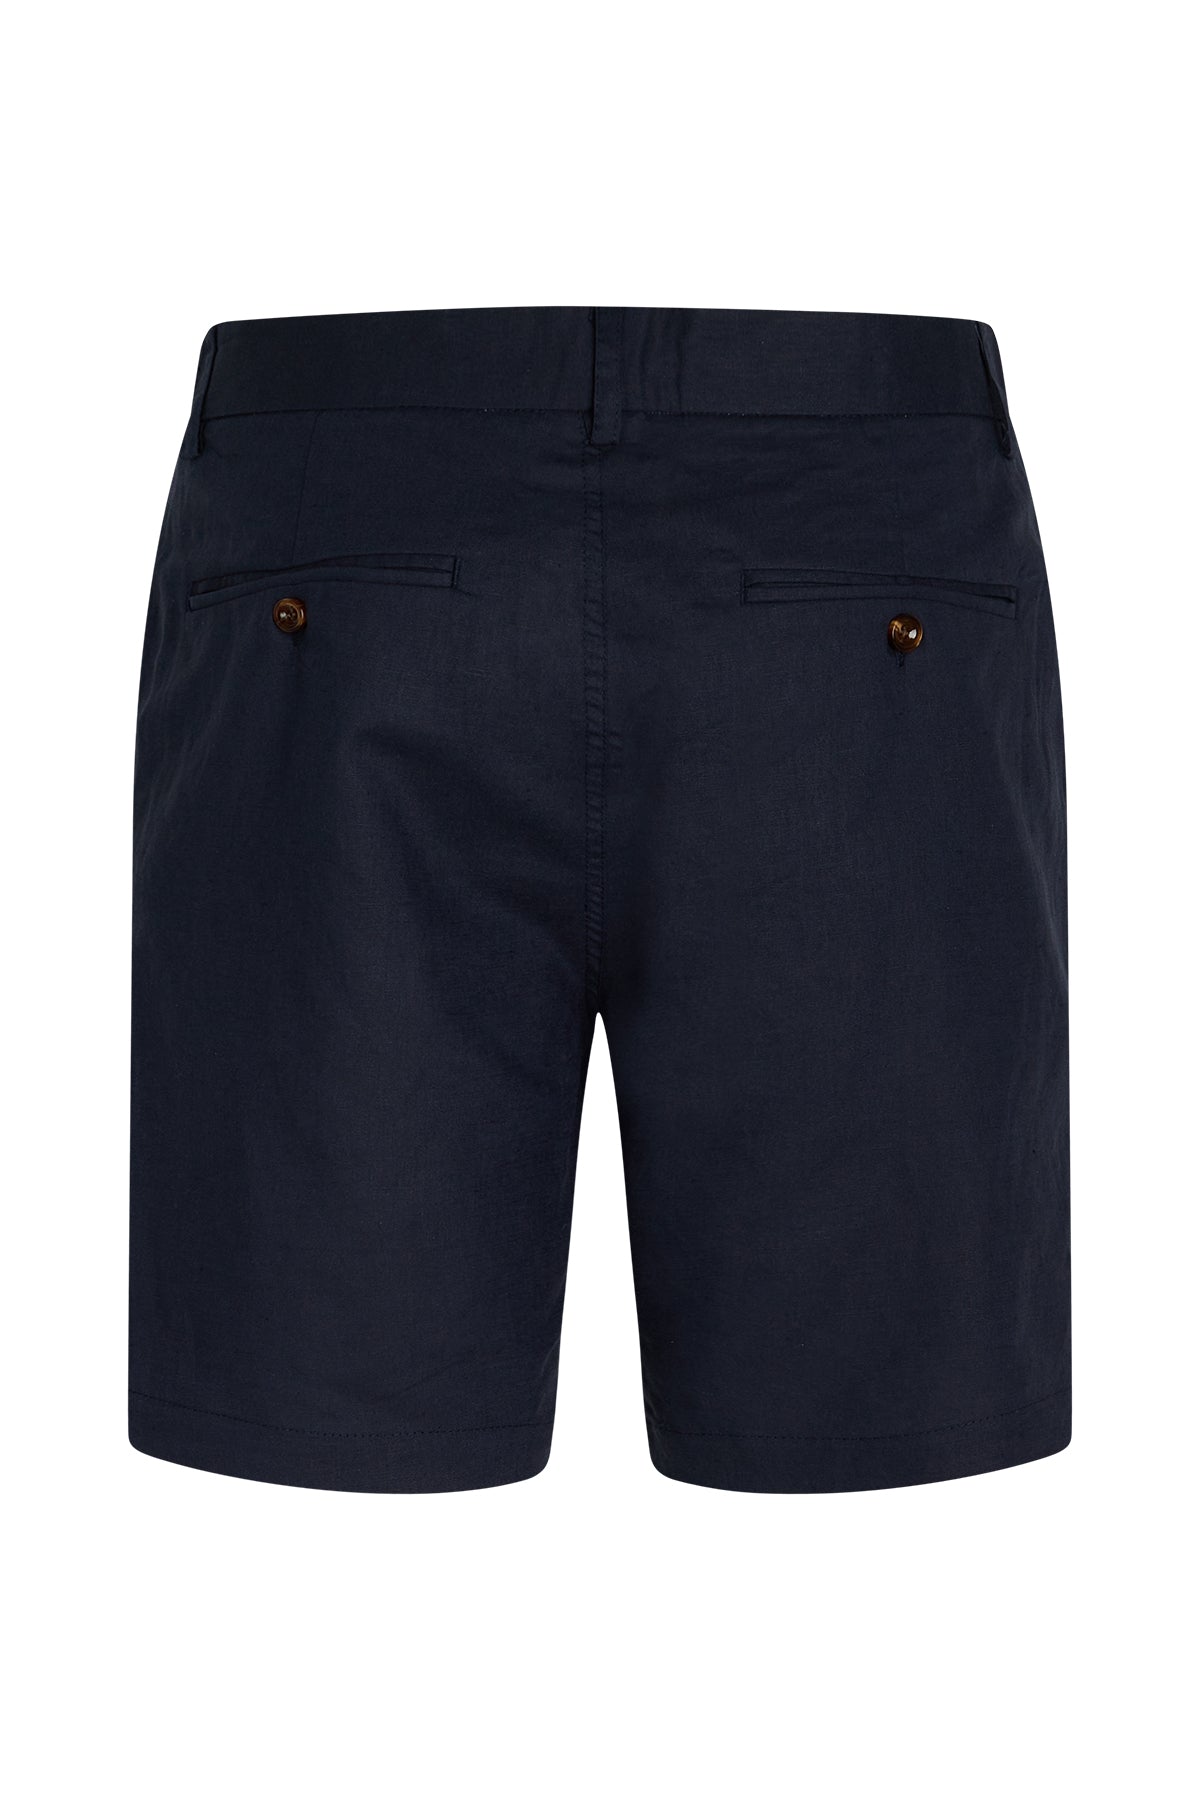 Bruuns Bazaar Herrer - Lino Germain Shorts - Navy Blazer